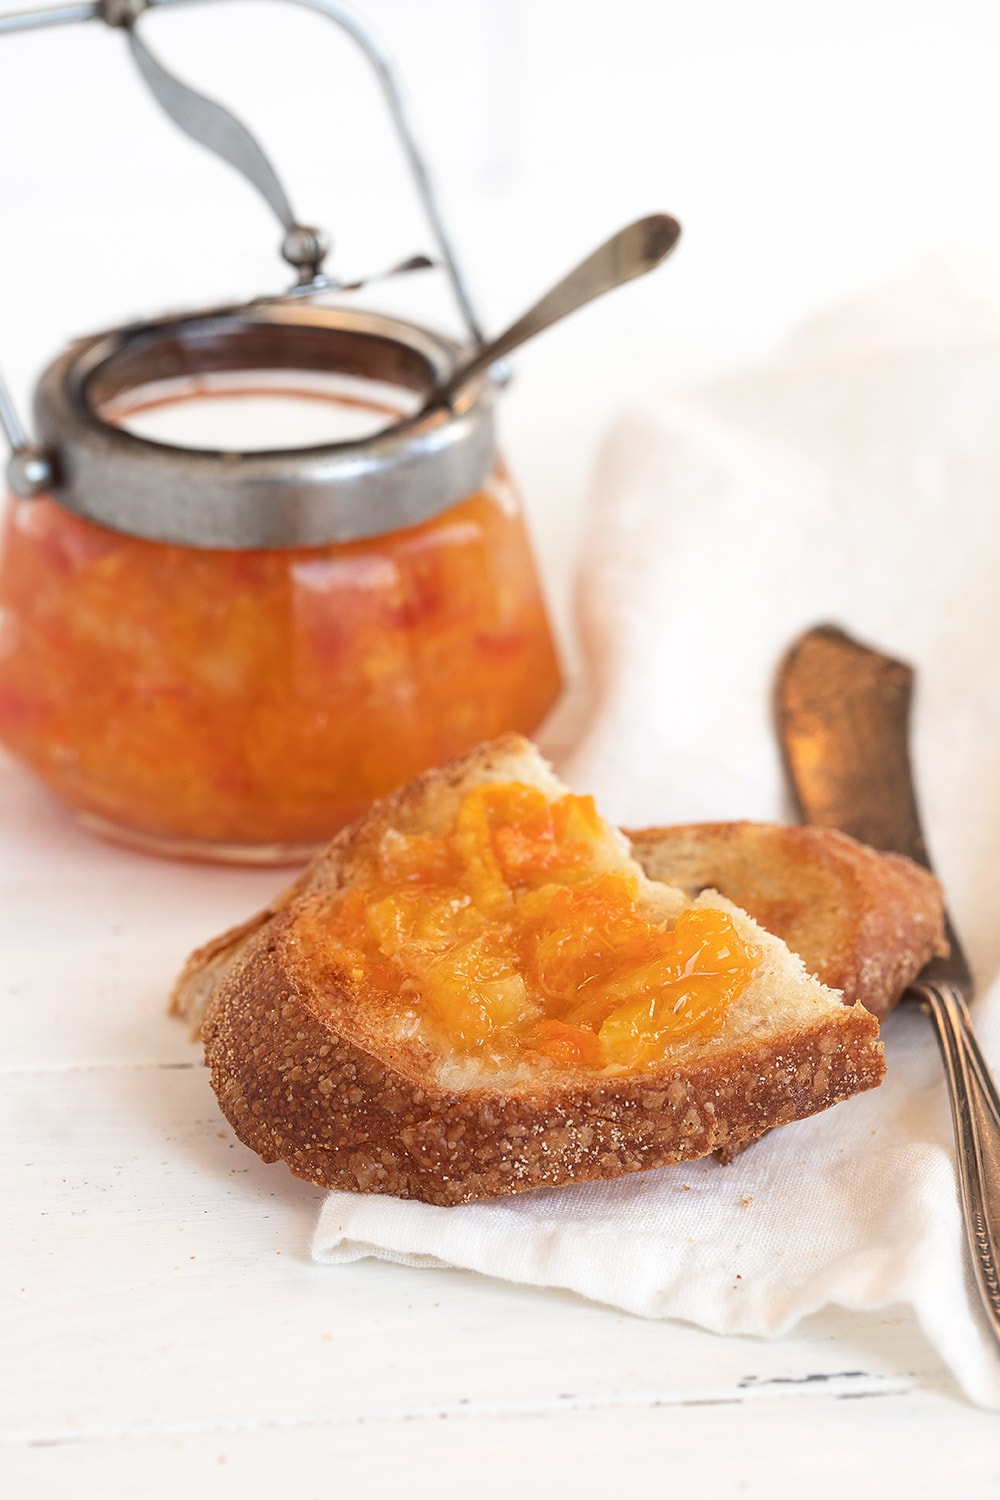 orange marmalade in jar and spread on toast